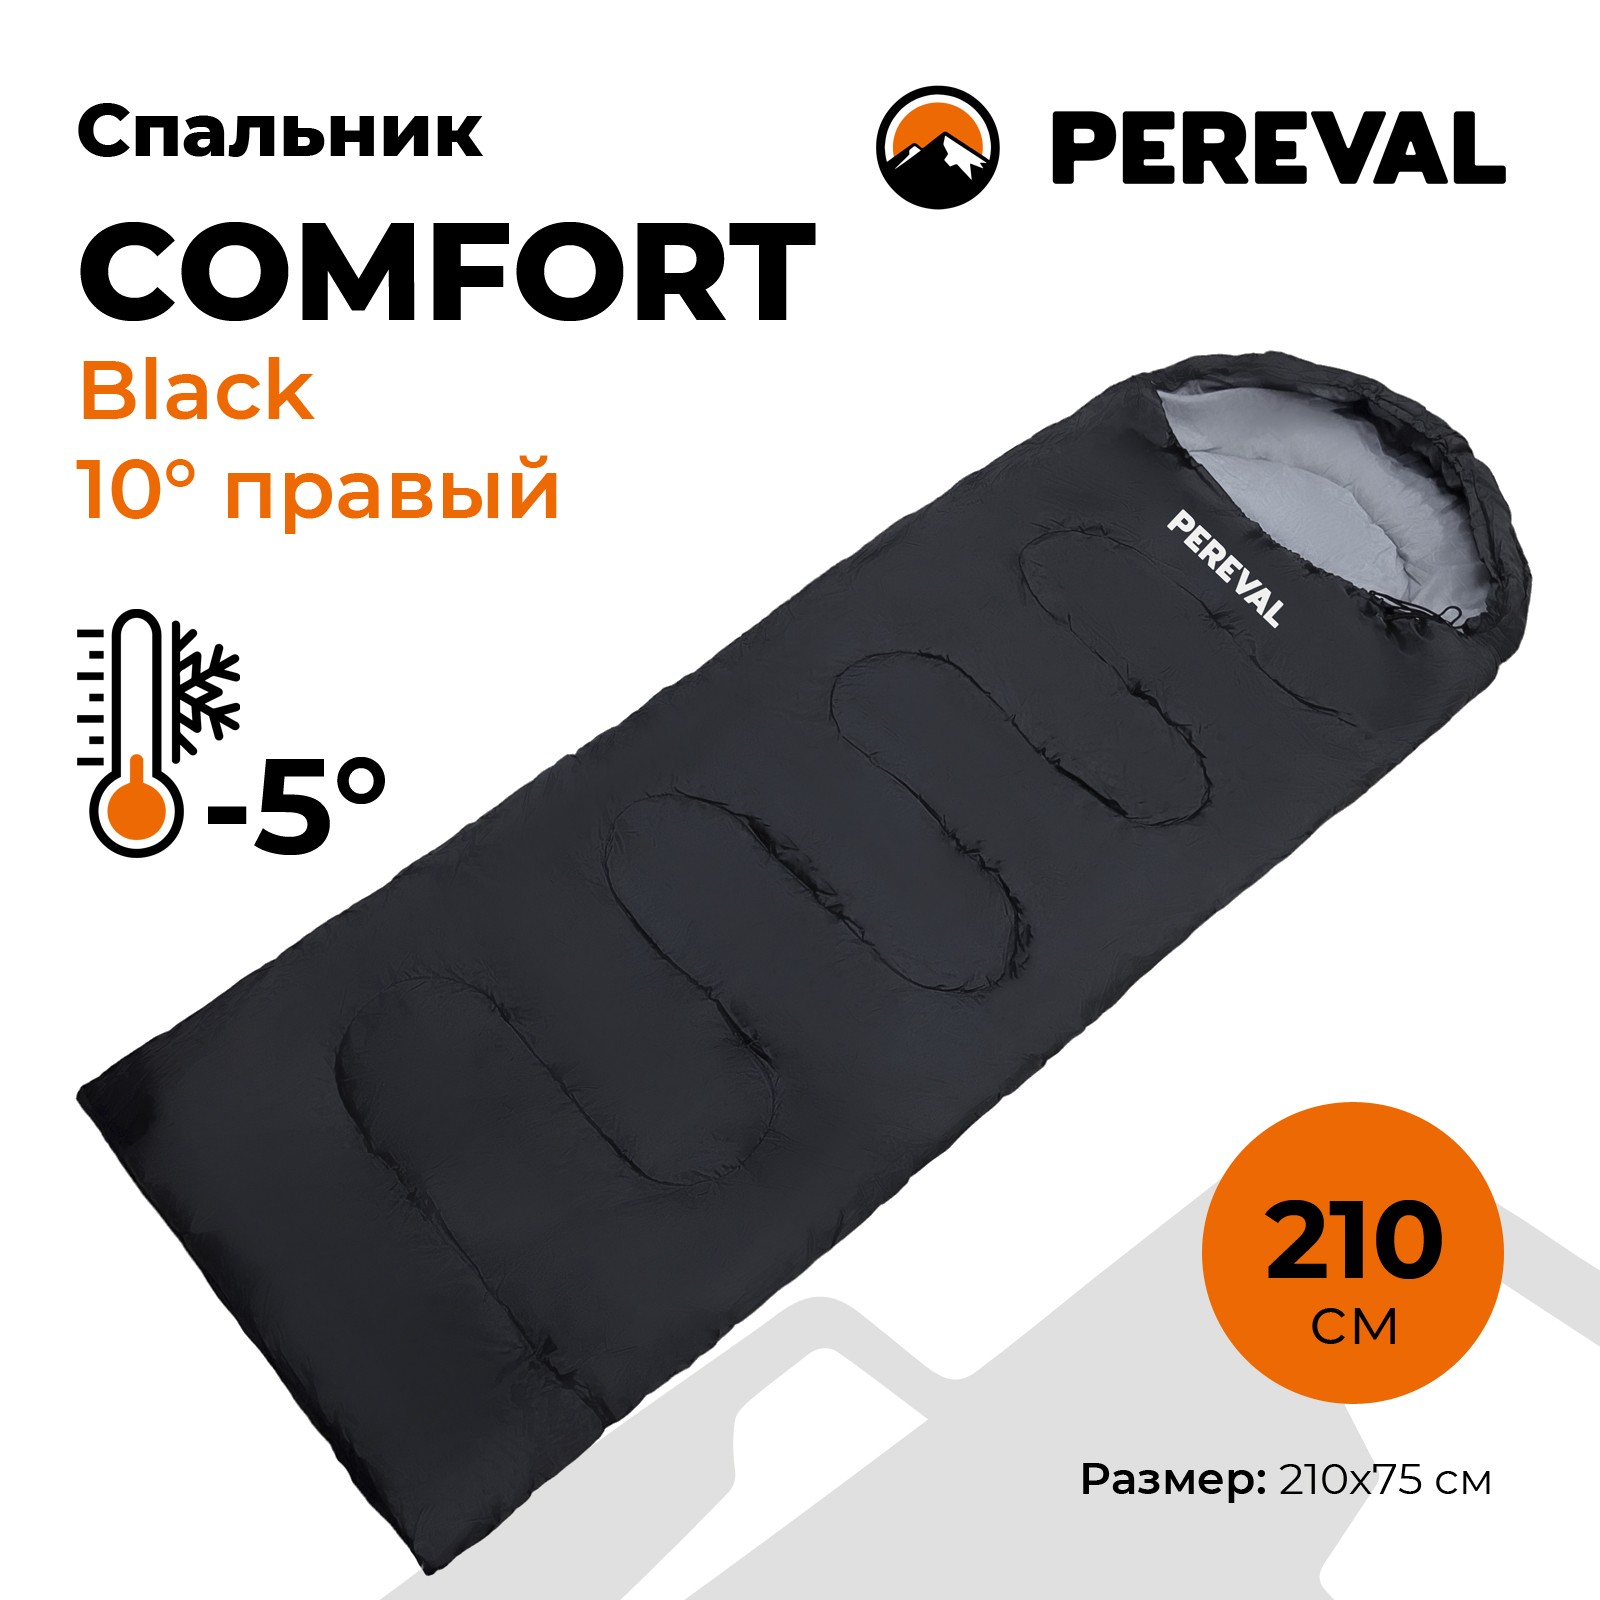 Спальник Pereval Comfort Black 10° правый - фото 1